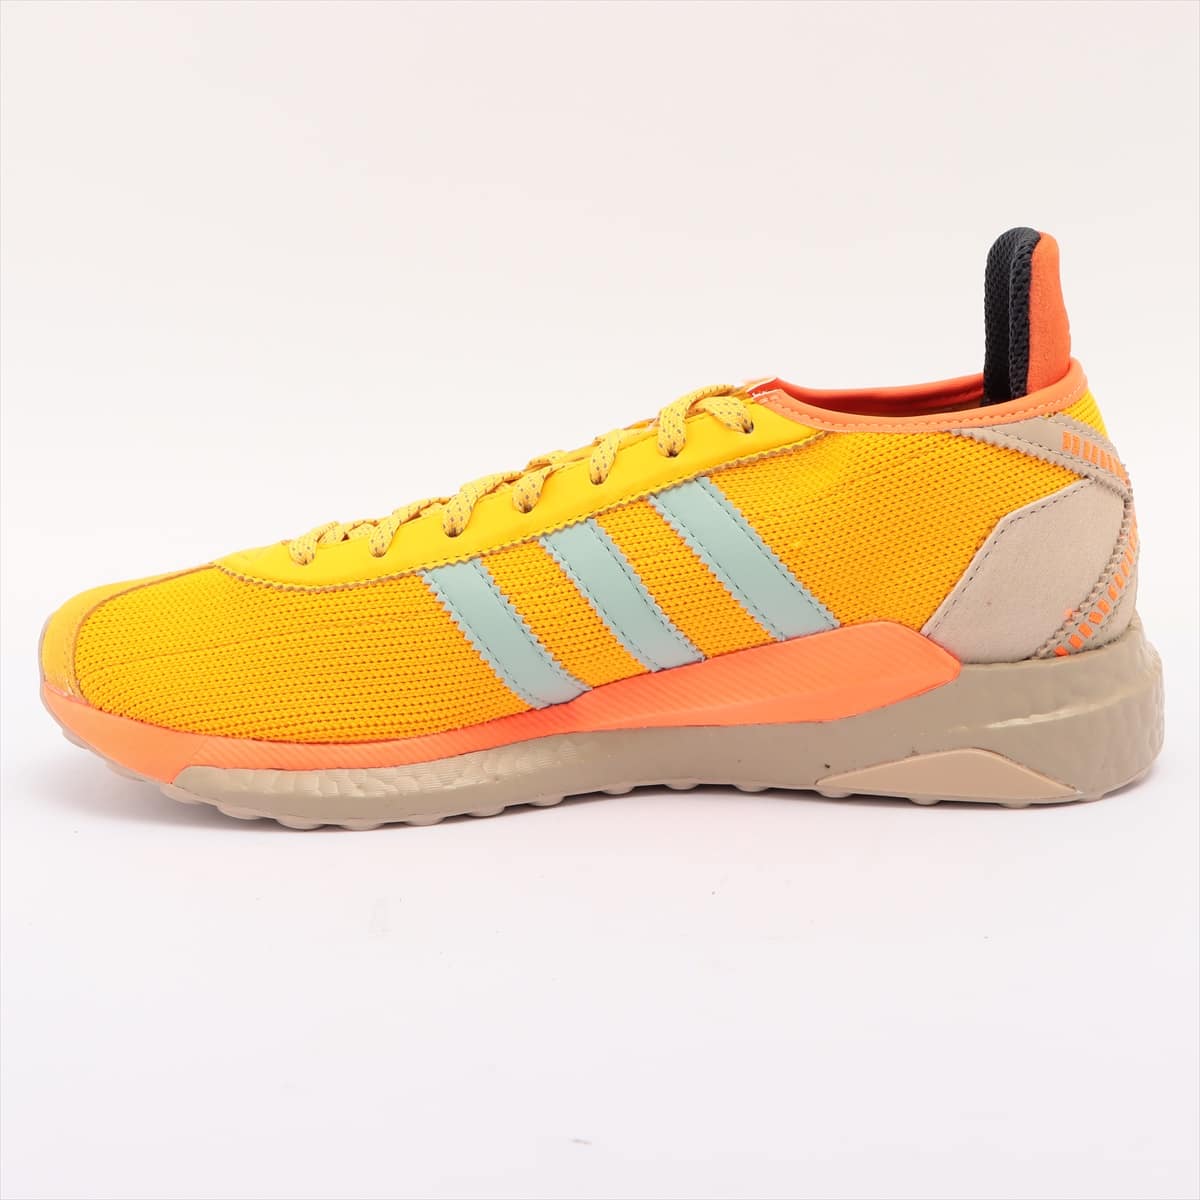 Adidas x Pharrell Williams Knit Sneakers 27cm Men's Yellow TOKIO SOLAR HU FZ2128